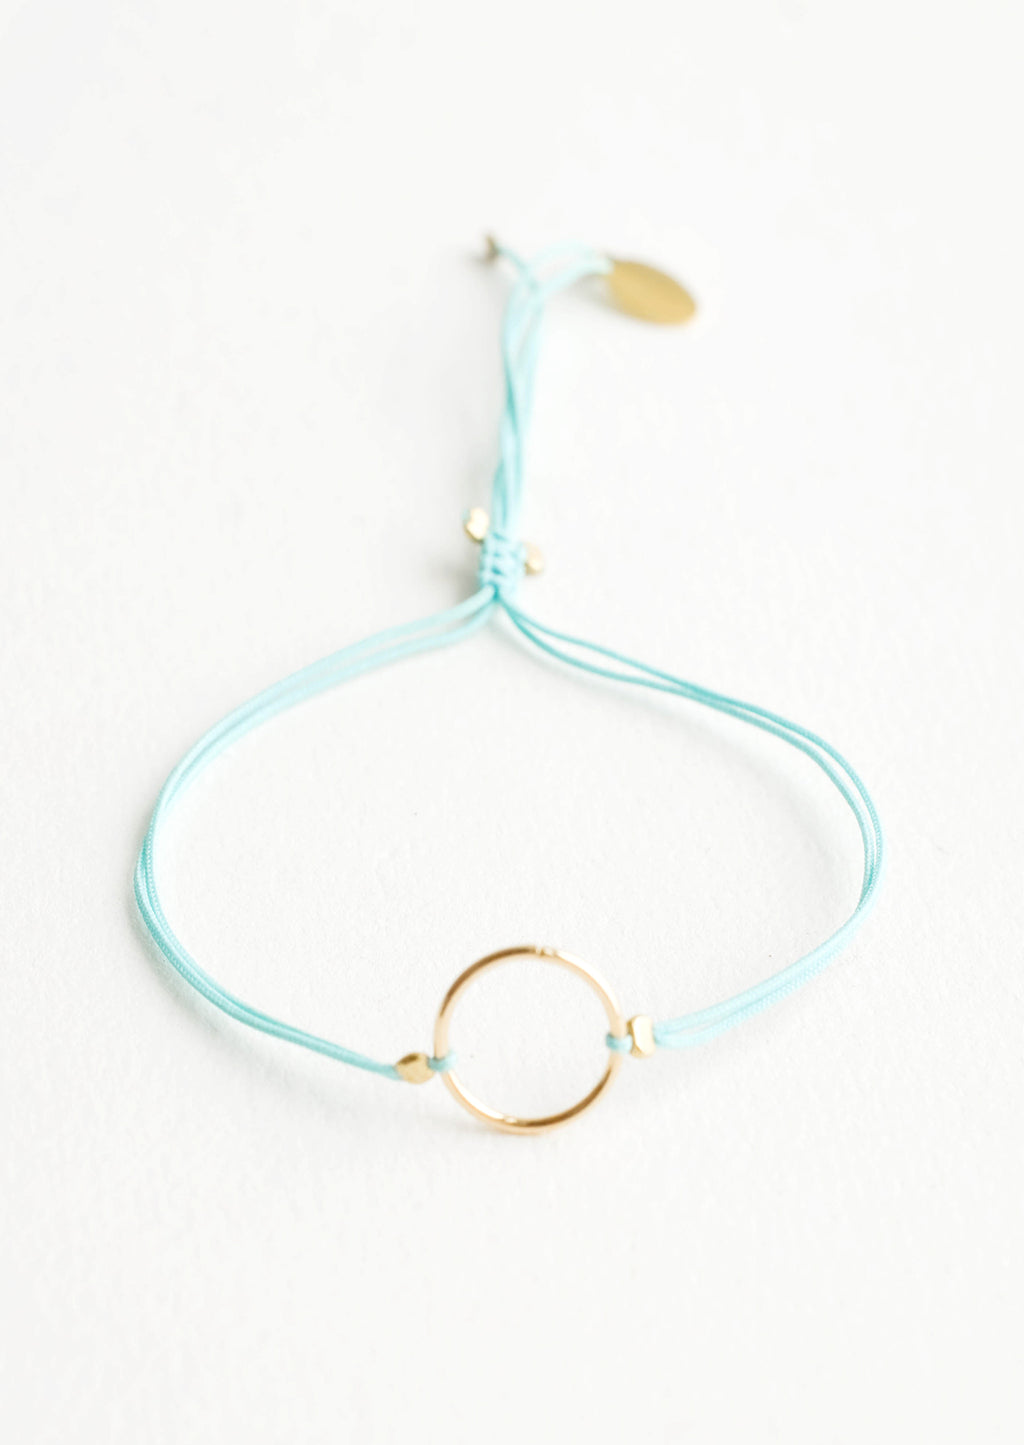 Aqua: Bracelet with yellow gold circle charm centered on an adjustable aqua string.